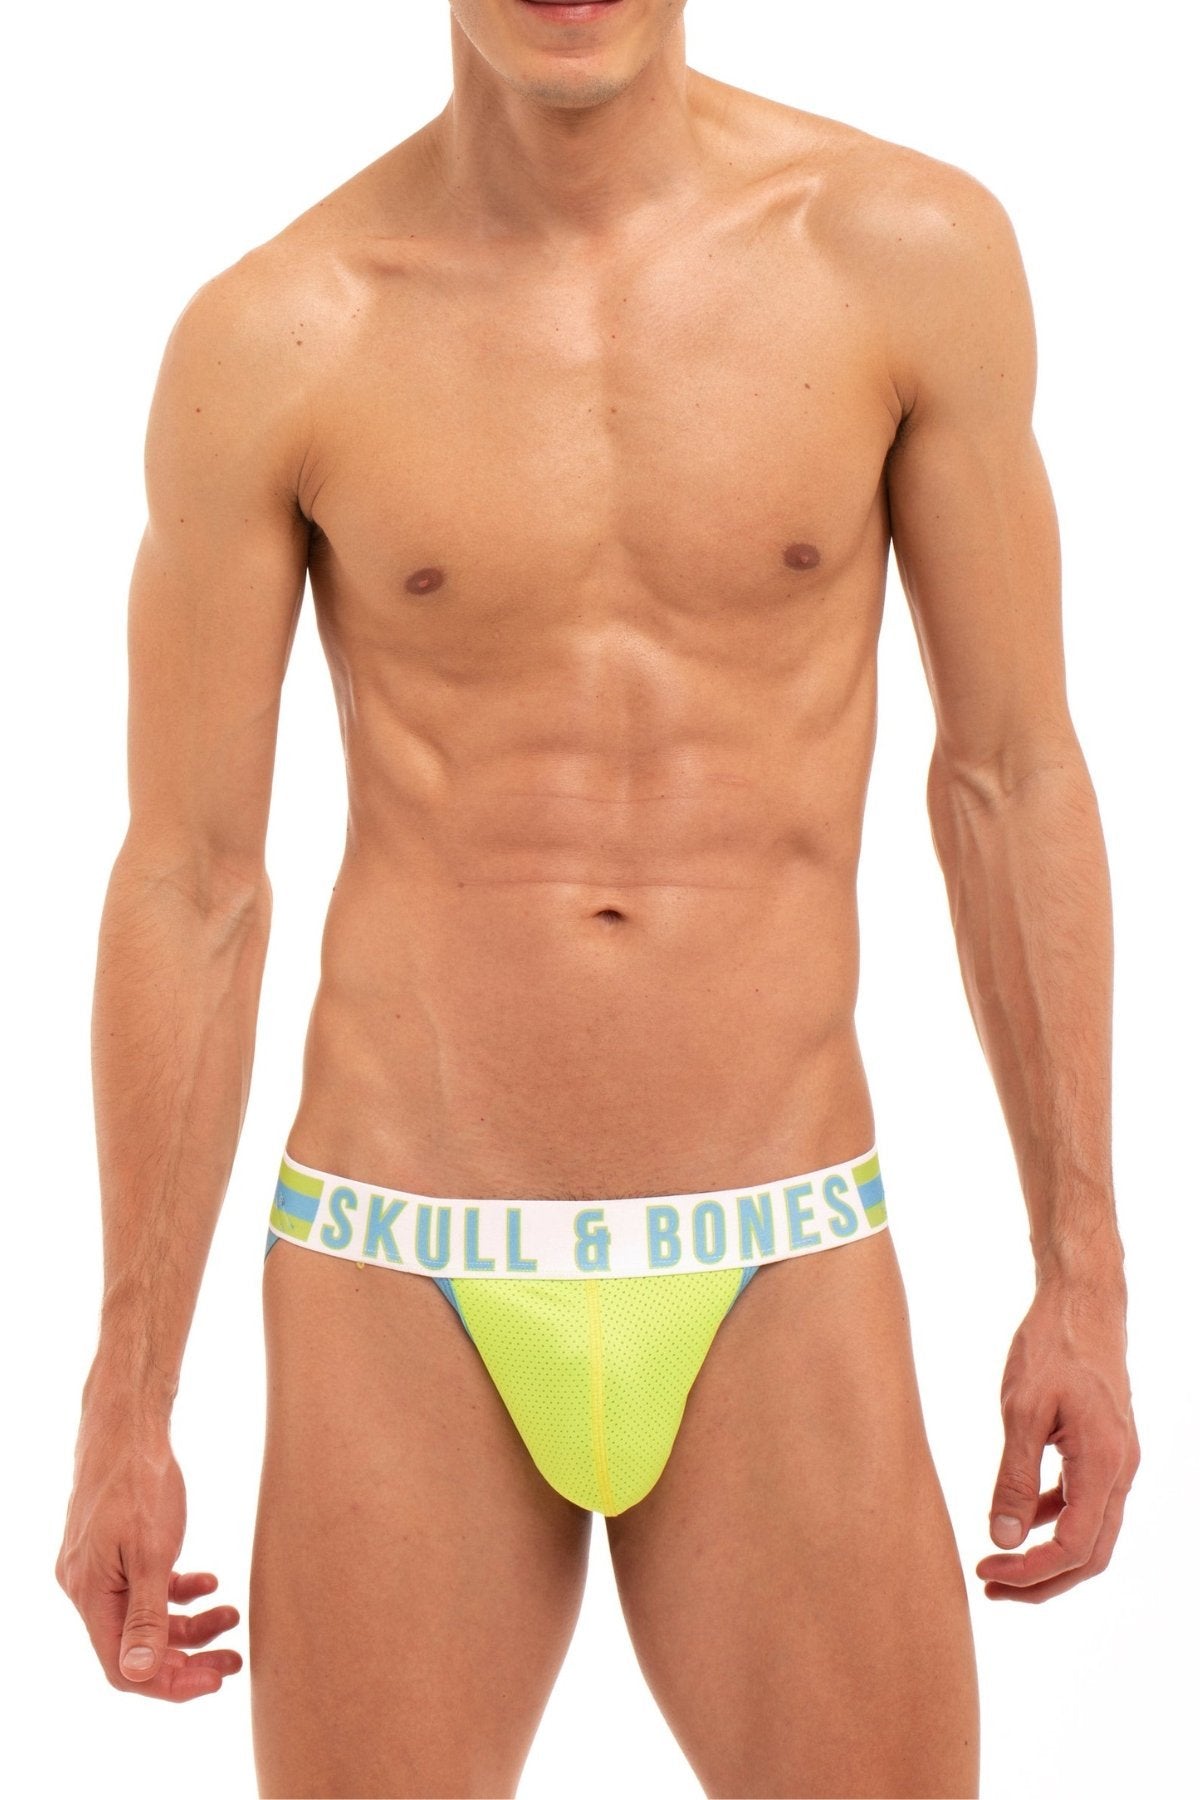 Skull and Bones Neon Green and Blue Sport Mesh Jock